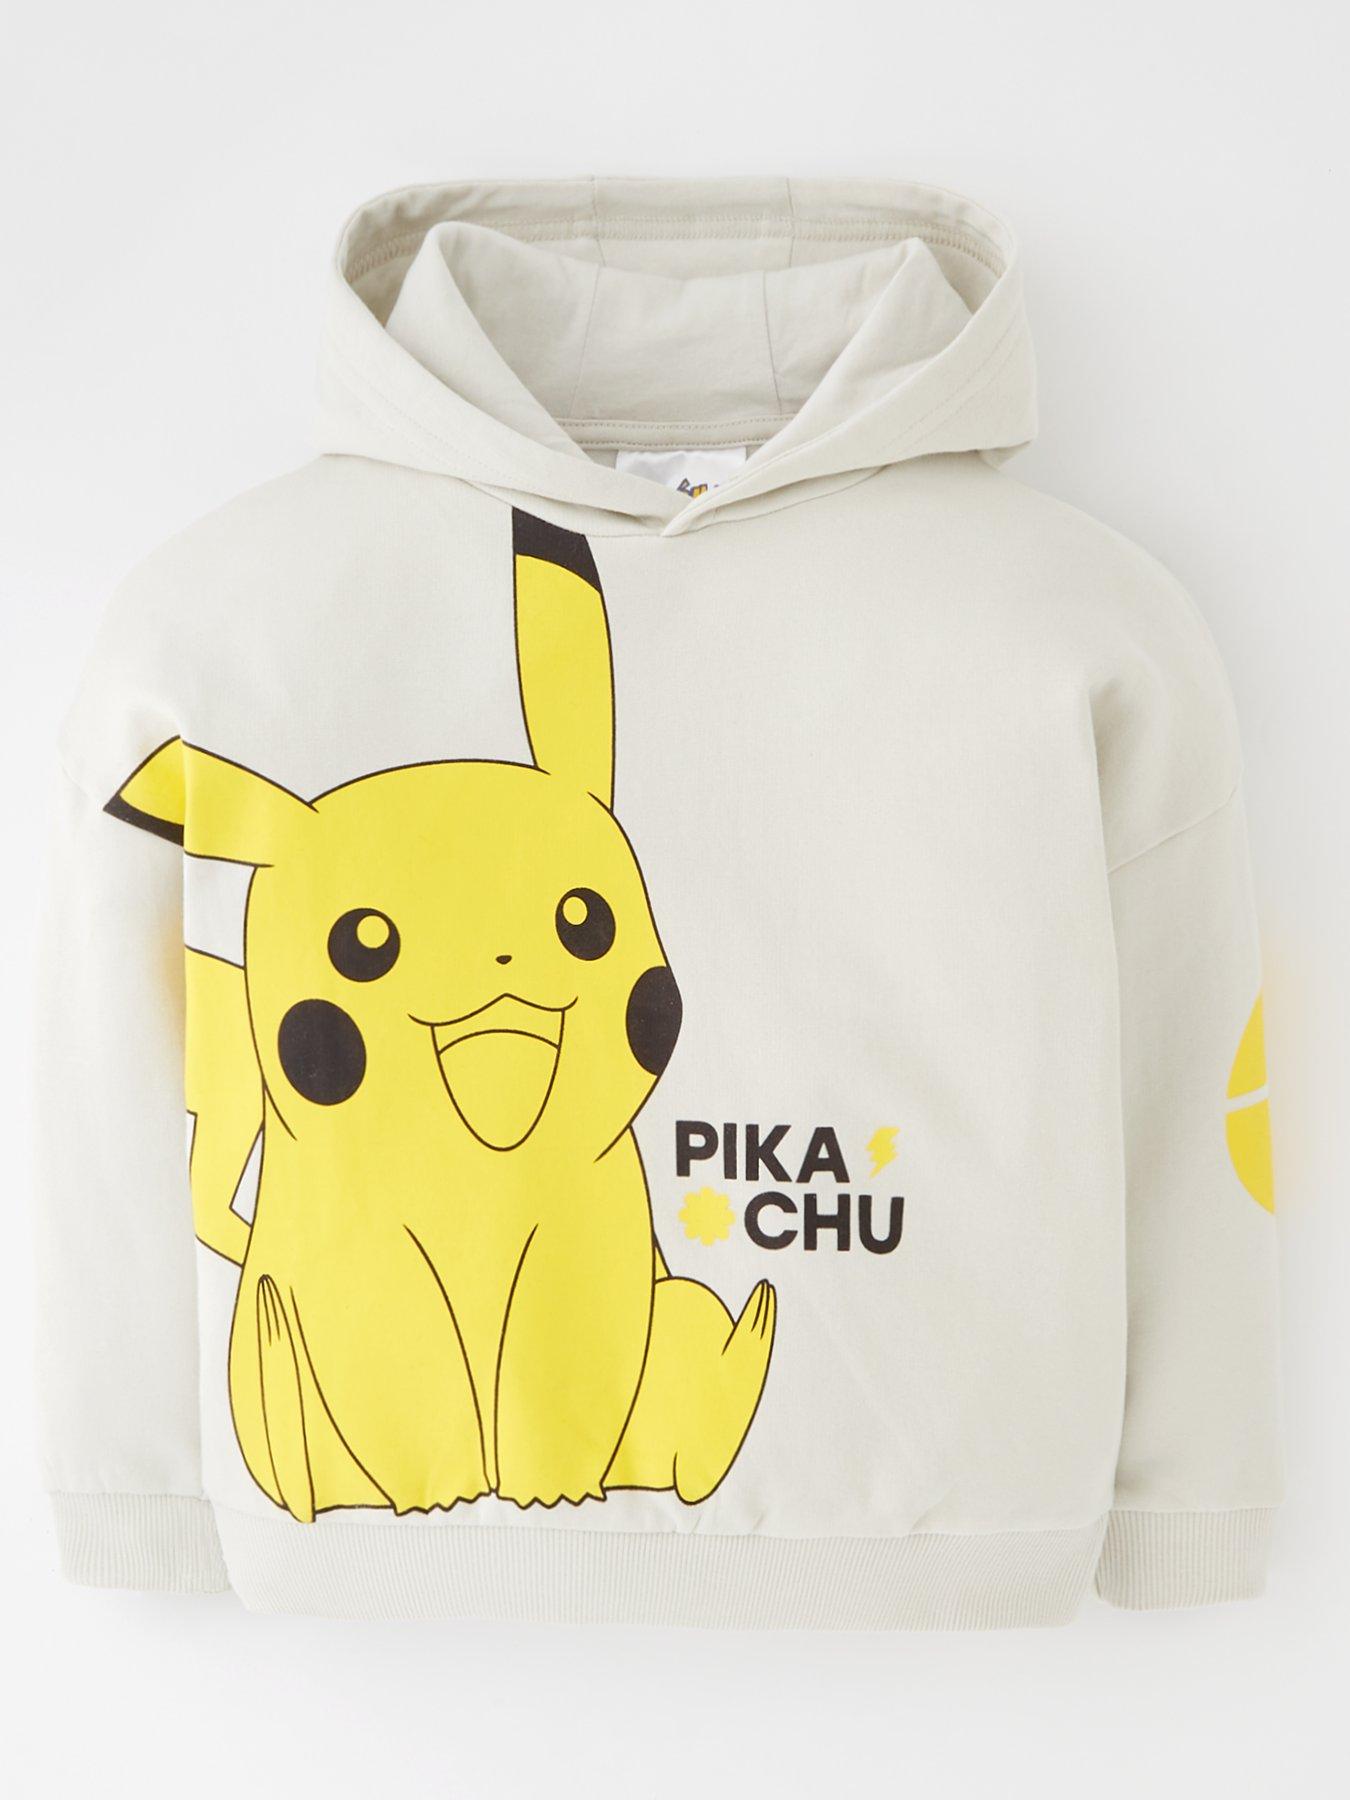 Pikachu Lingerie -  UK